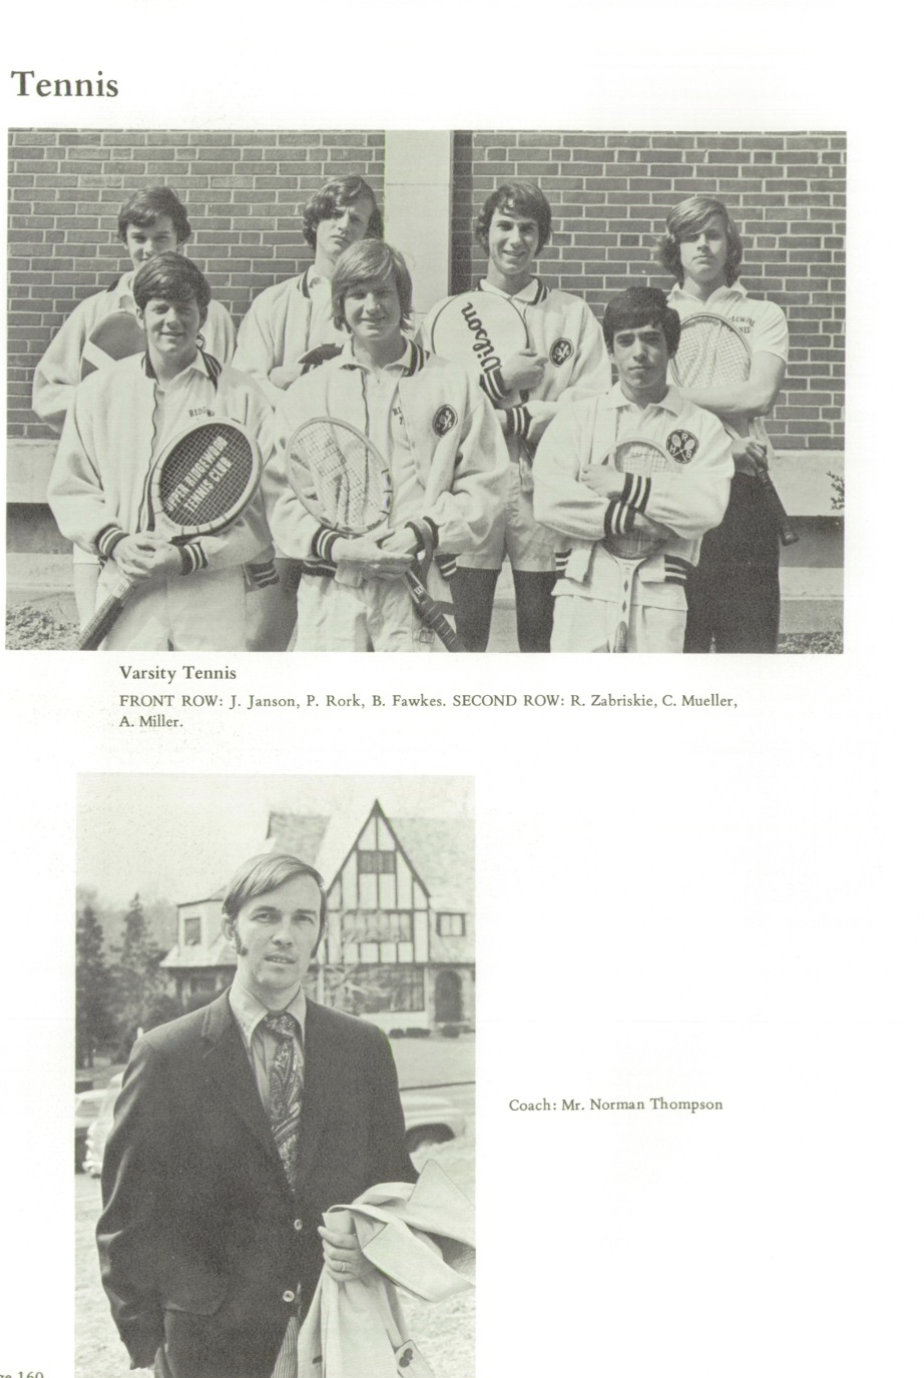 1971 Boys’ Tennis Team